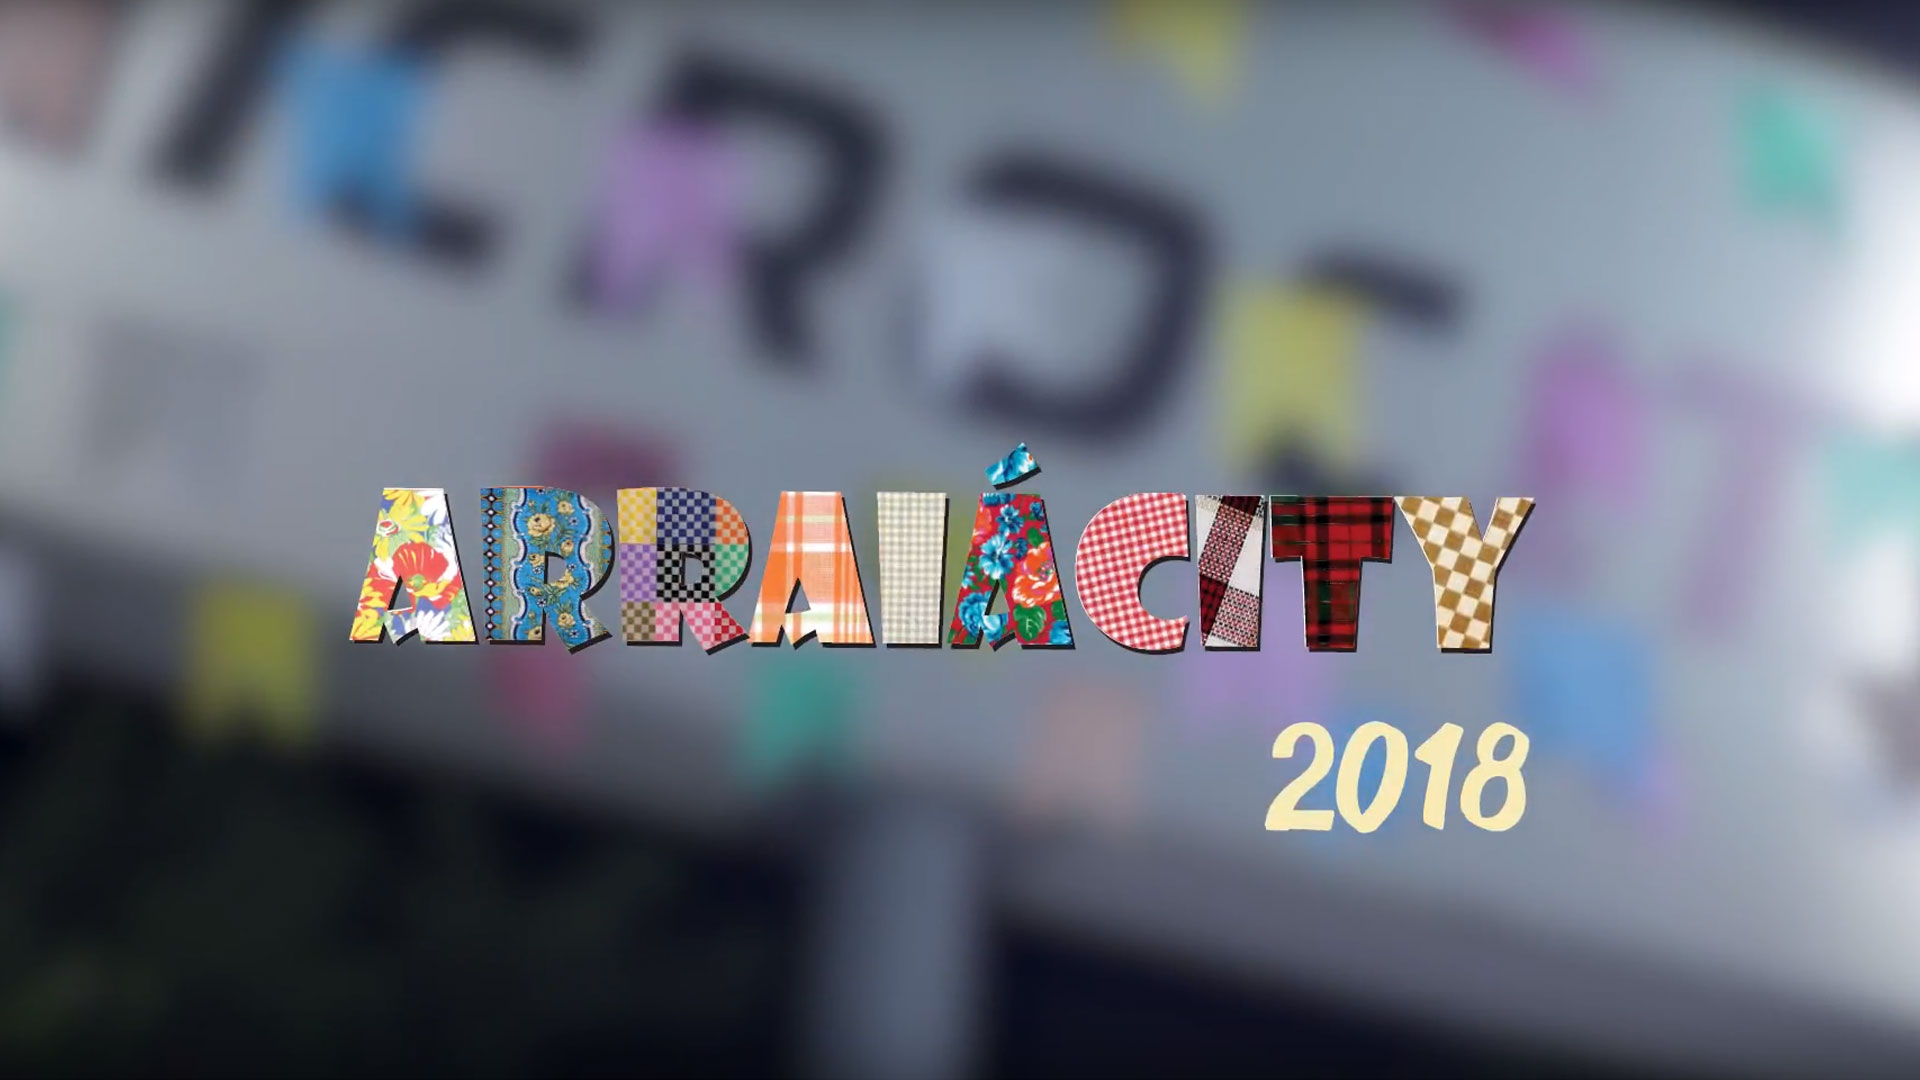 Microcity • Arraiacity 2018